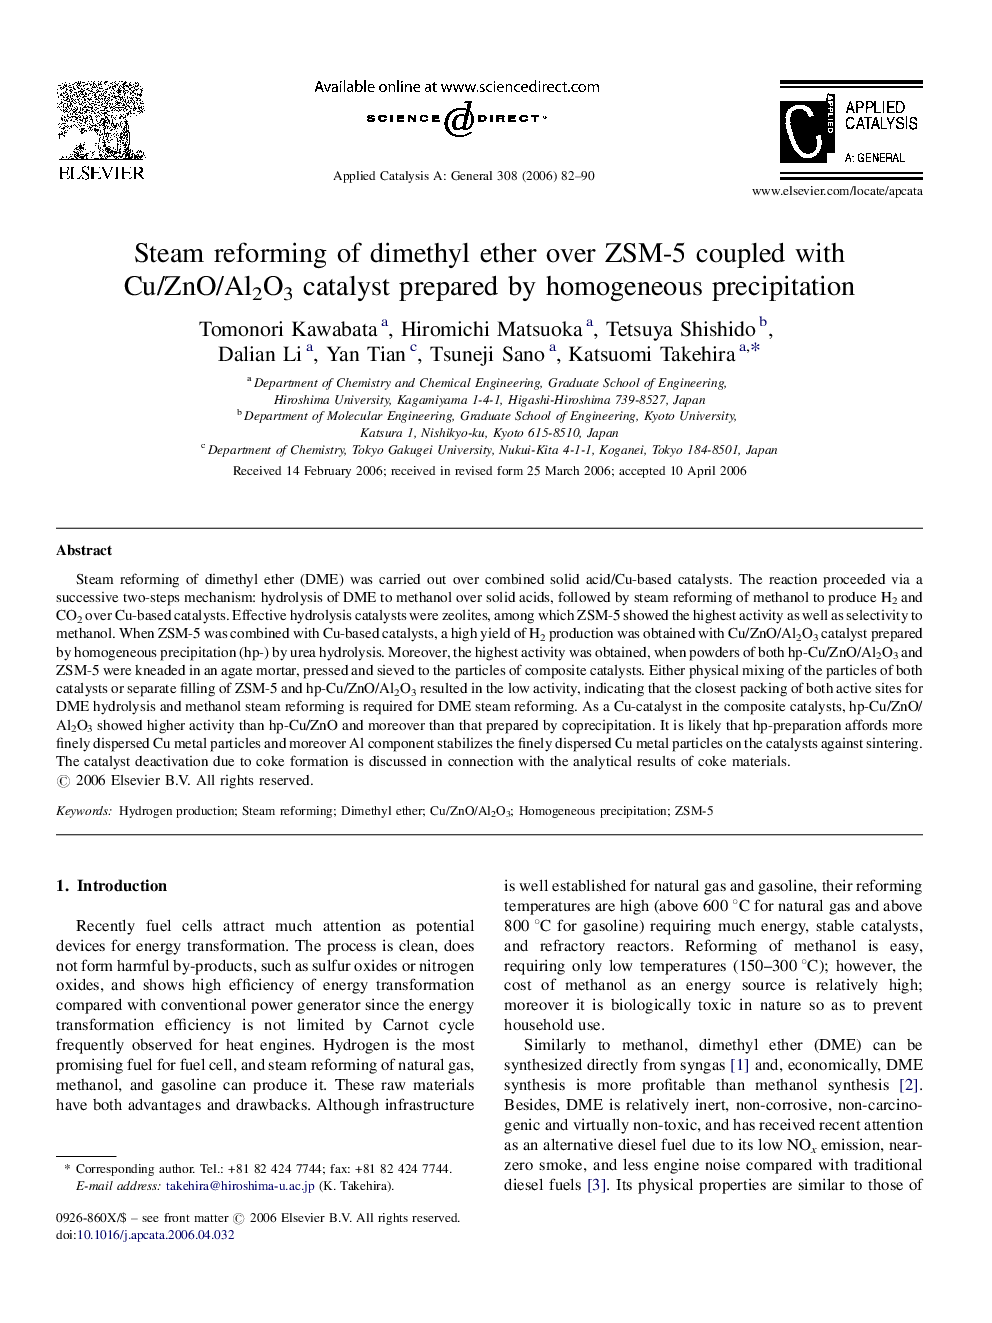 Steam reforming of dimethyl ether over ZSM-5 coupled with Cu/ZnO/Al2O3 catalyst prepared by homogeneous precipitation